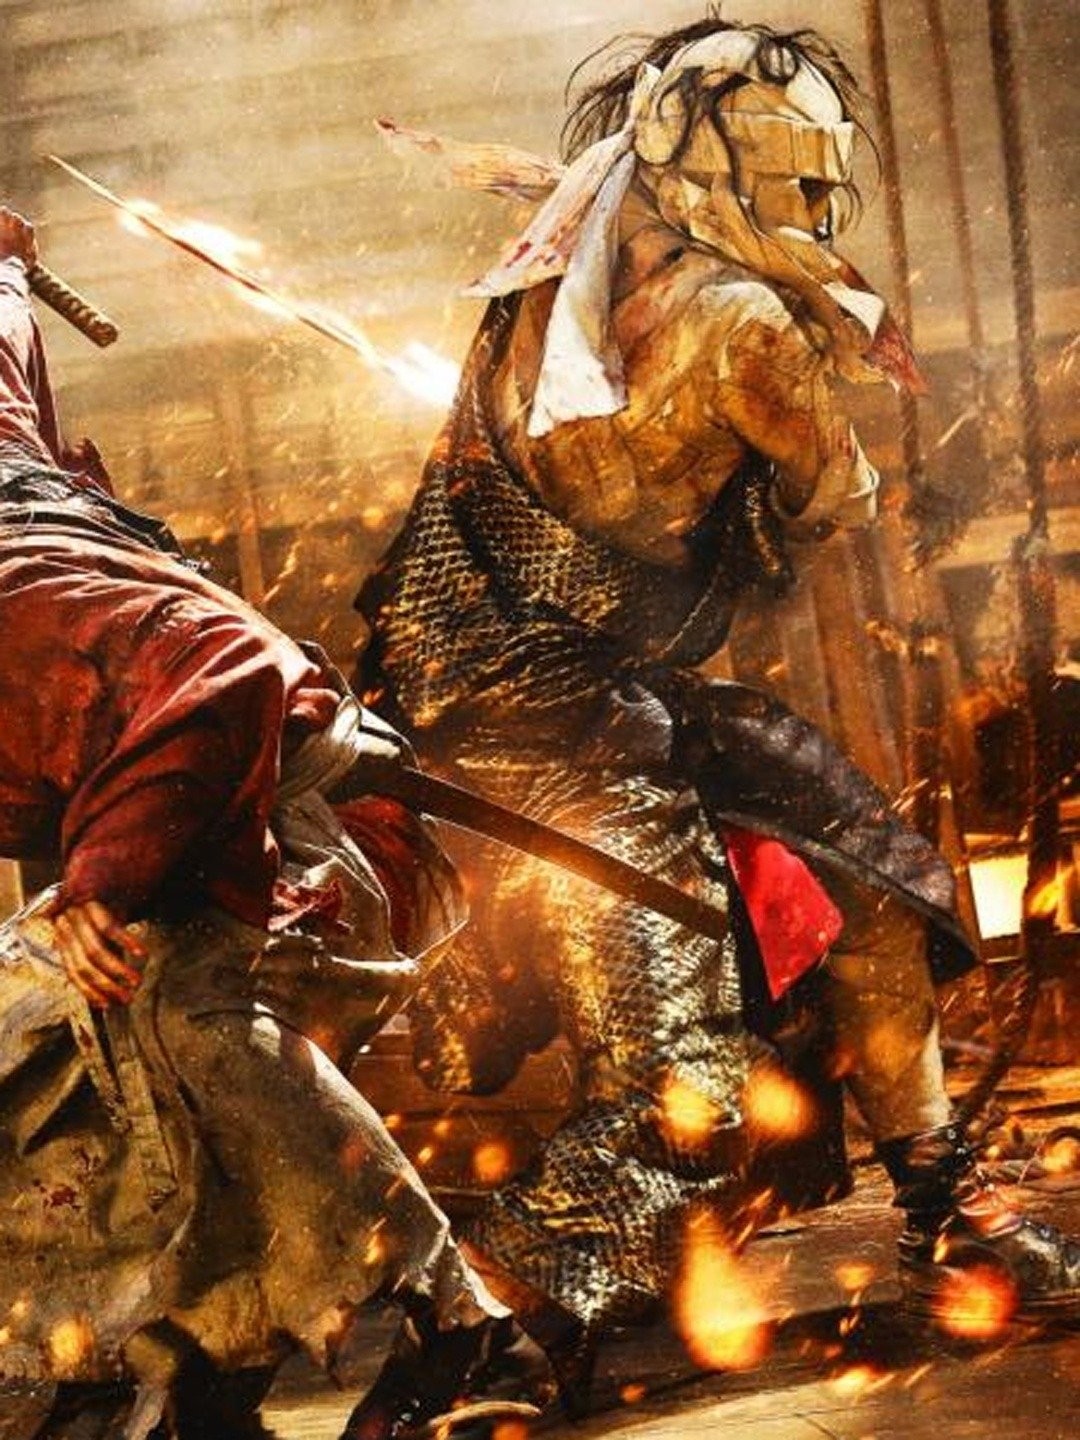 Rurouni Kenshin: Kyoto Inferno (BTS) - Just.FireFlies